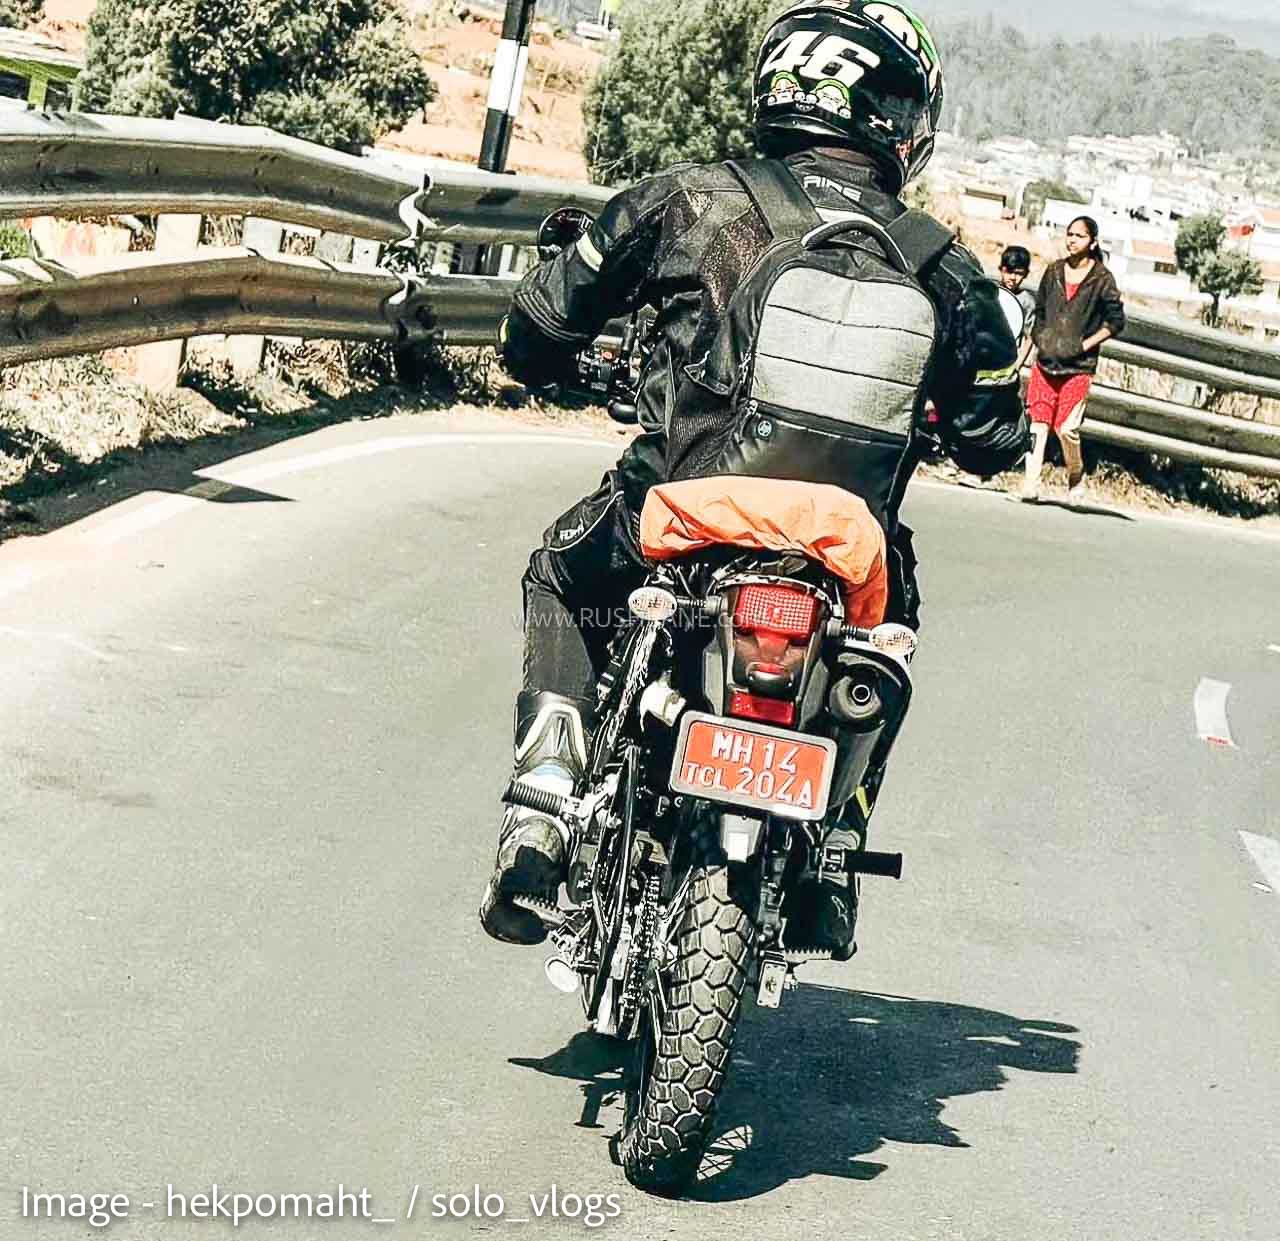 Yamaha ADV Motorcycle Spied - Rear